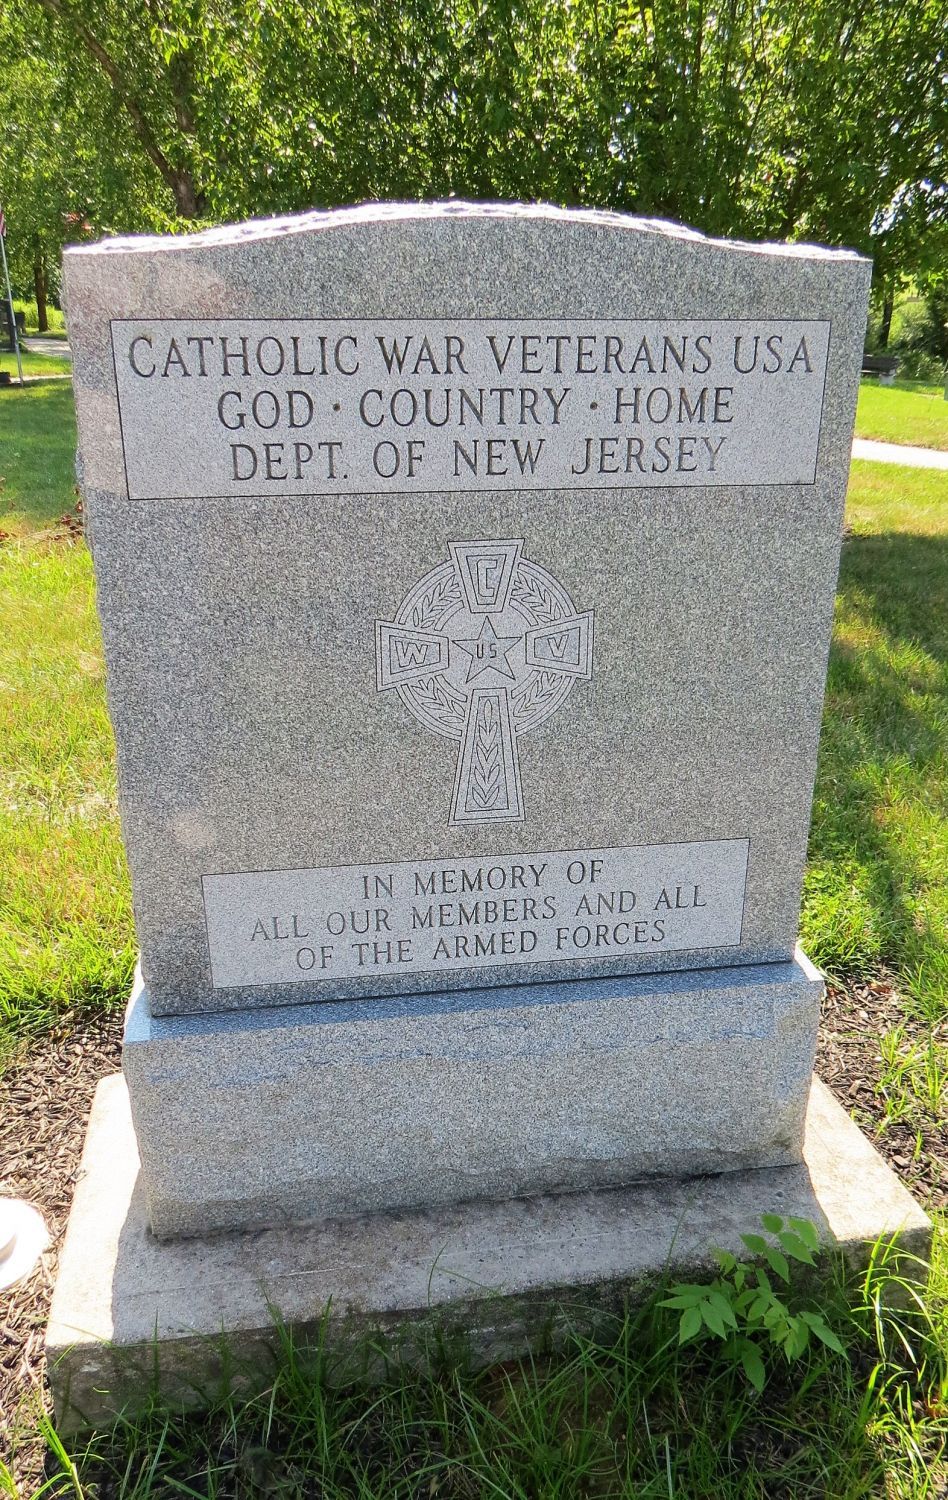 Catholic War Veterans, Wrightstown, New Jersey